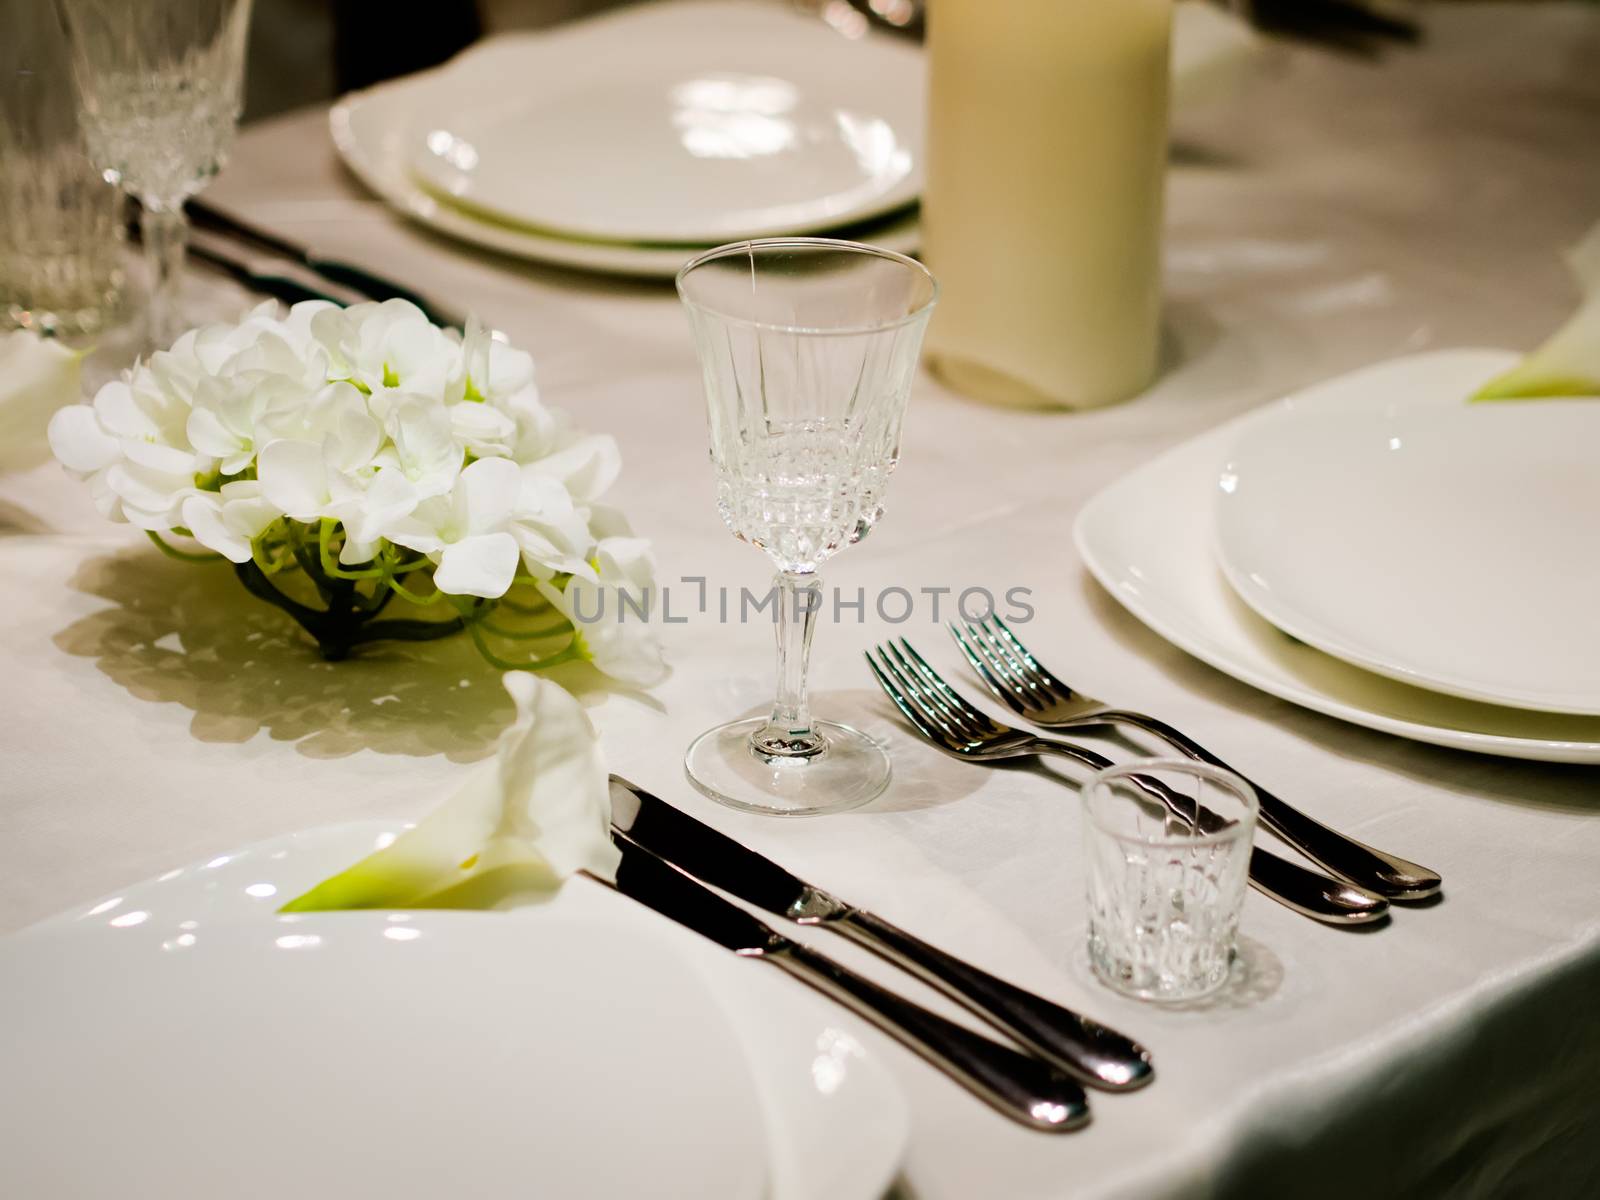 Beautiful table setting for wedding. Shallow DOF